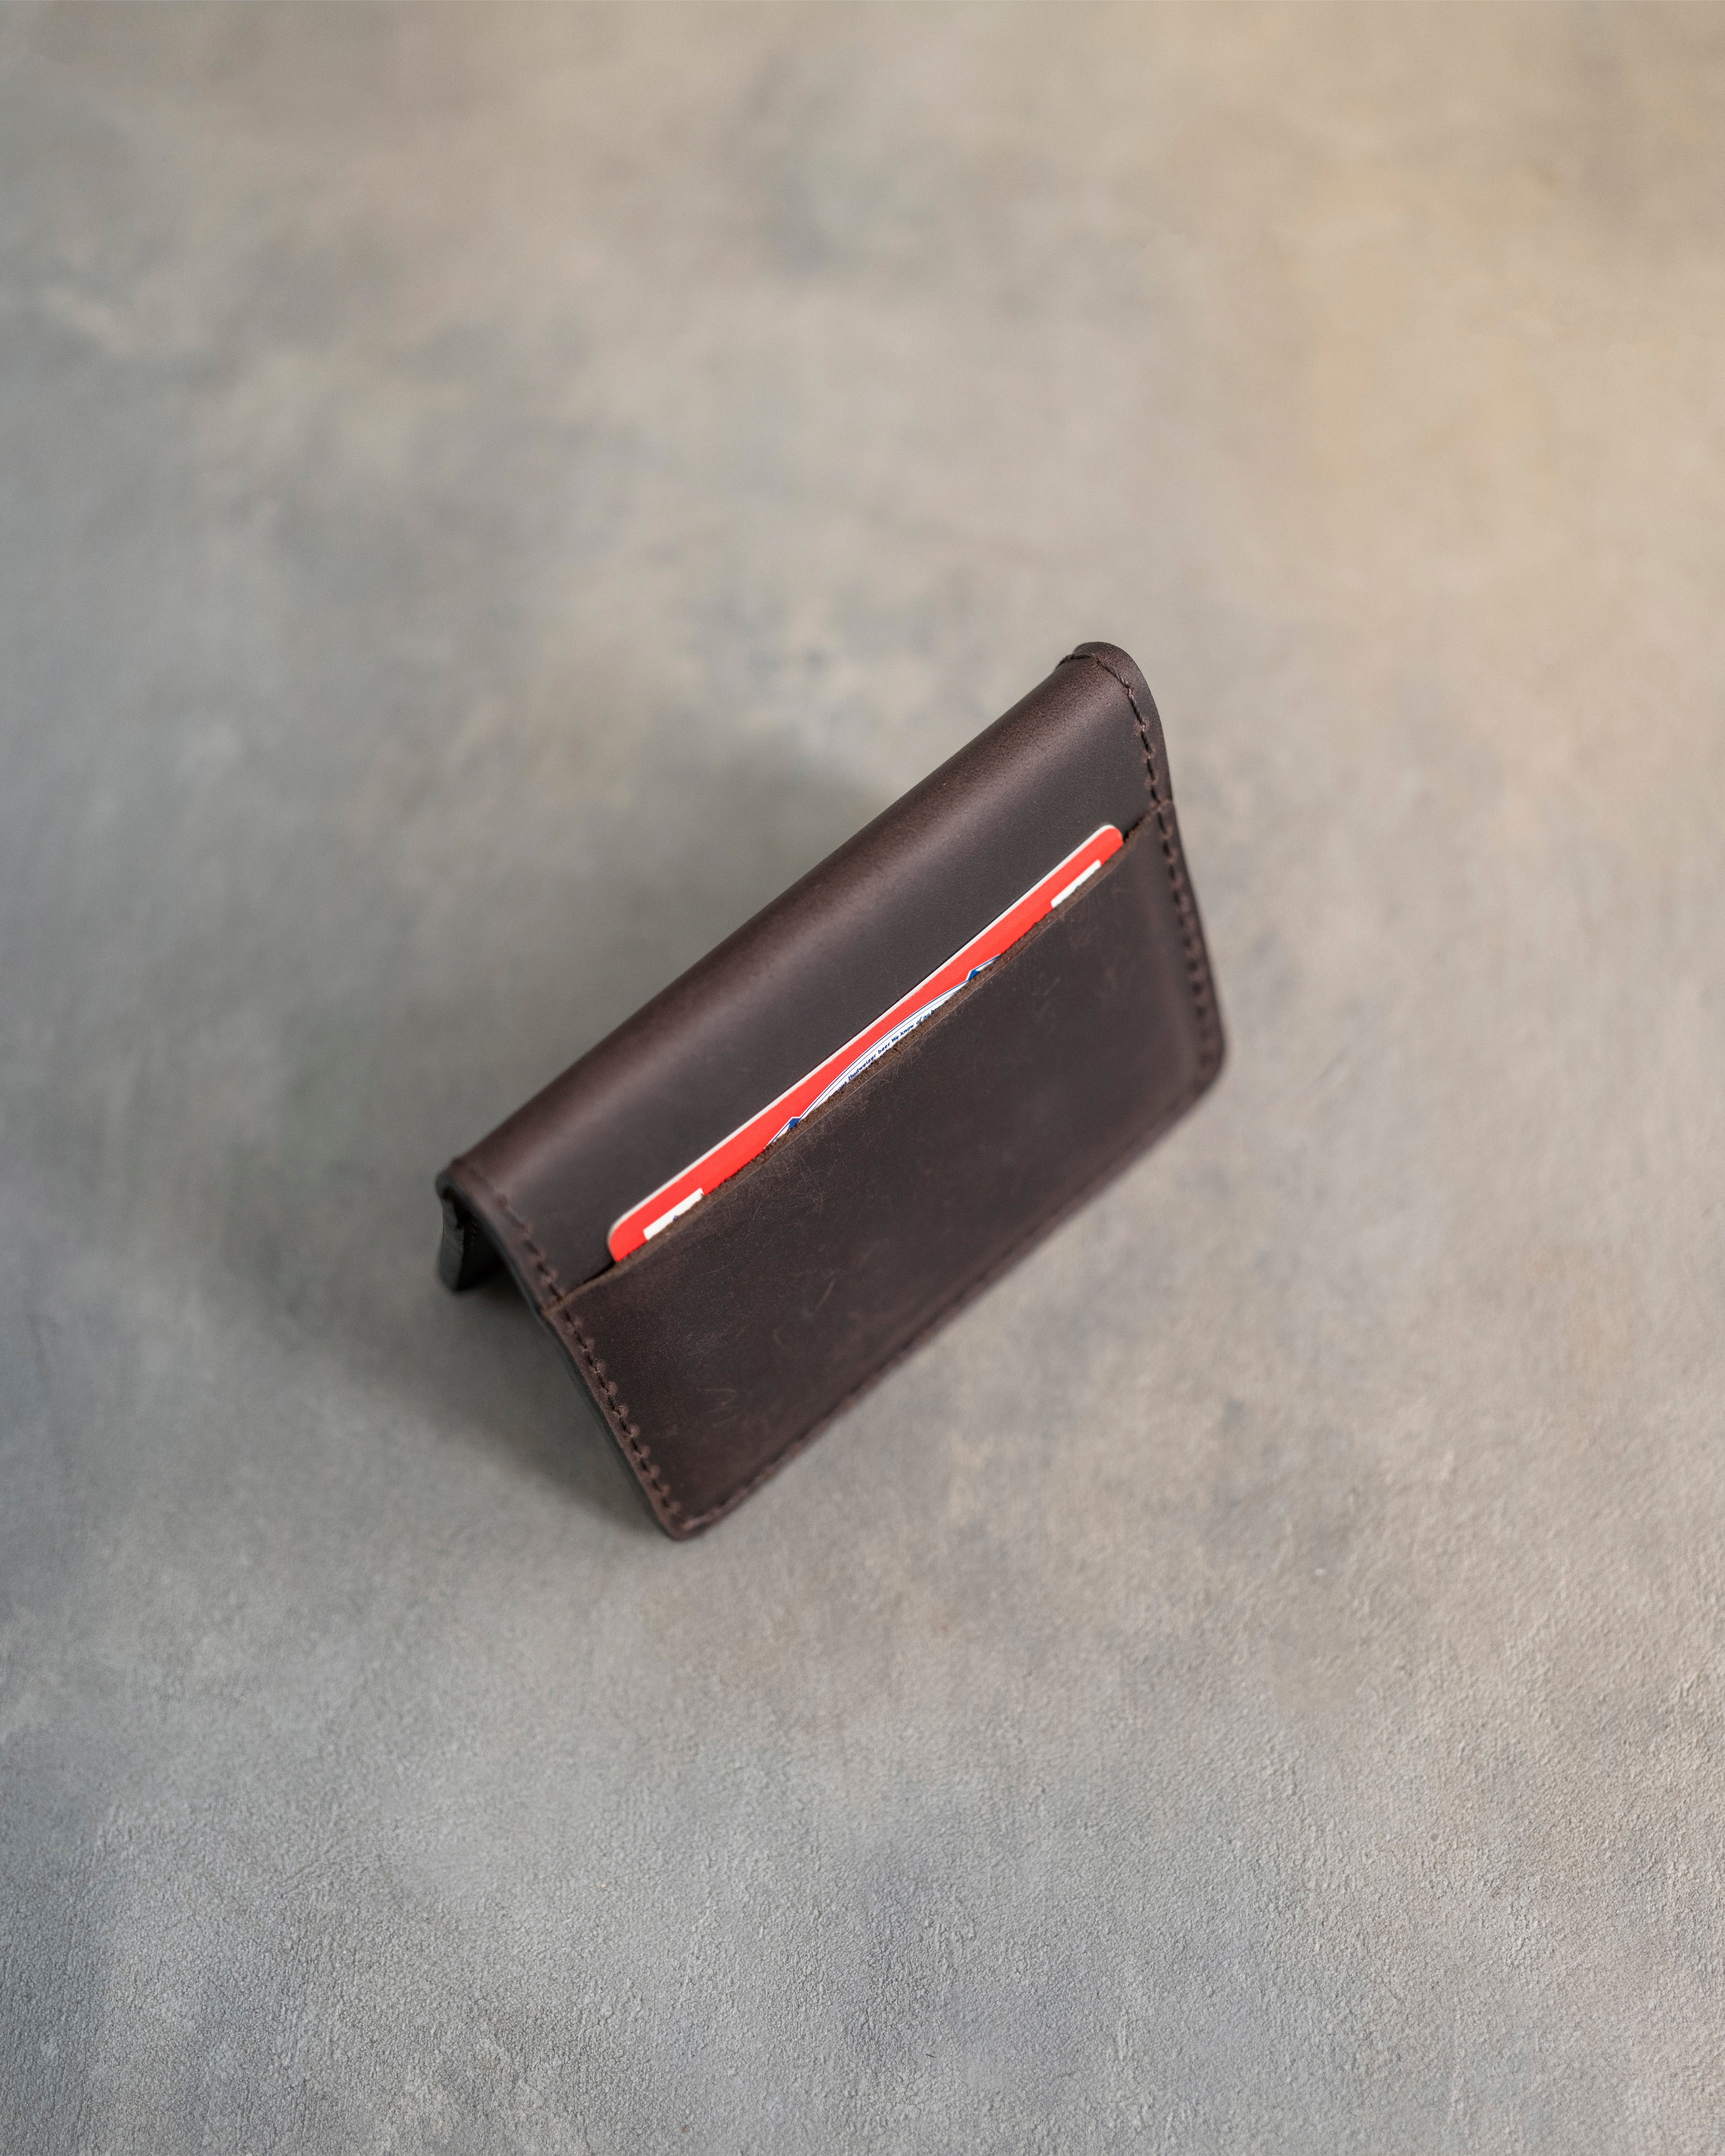 Card & Cash Wallet in Dark Espresso Leather